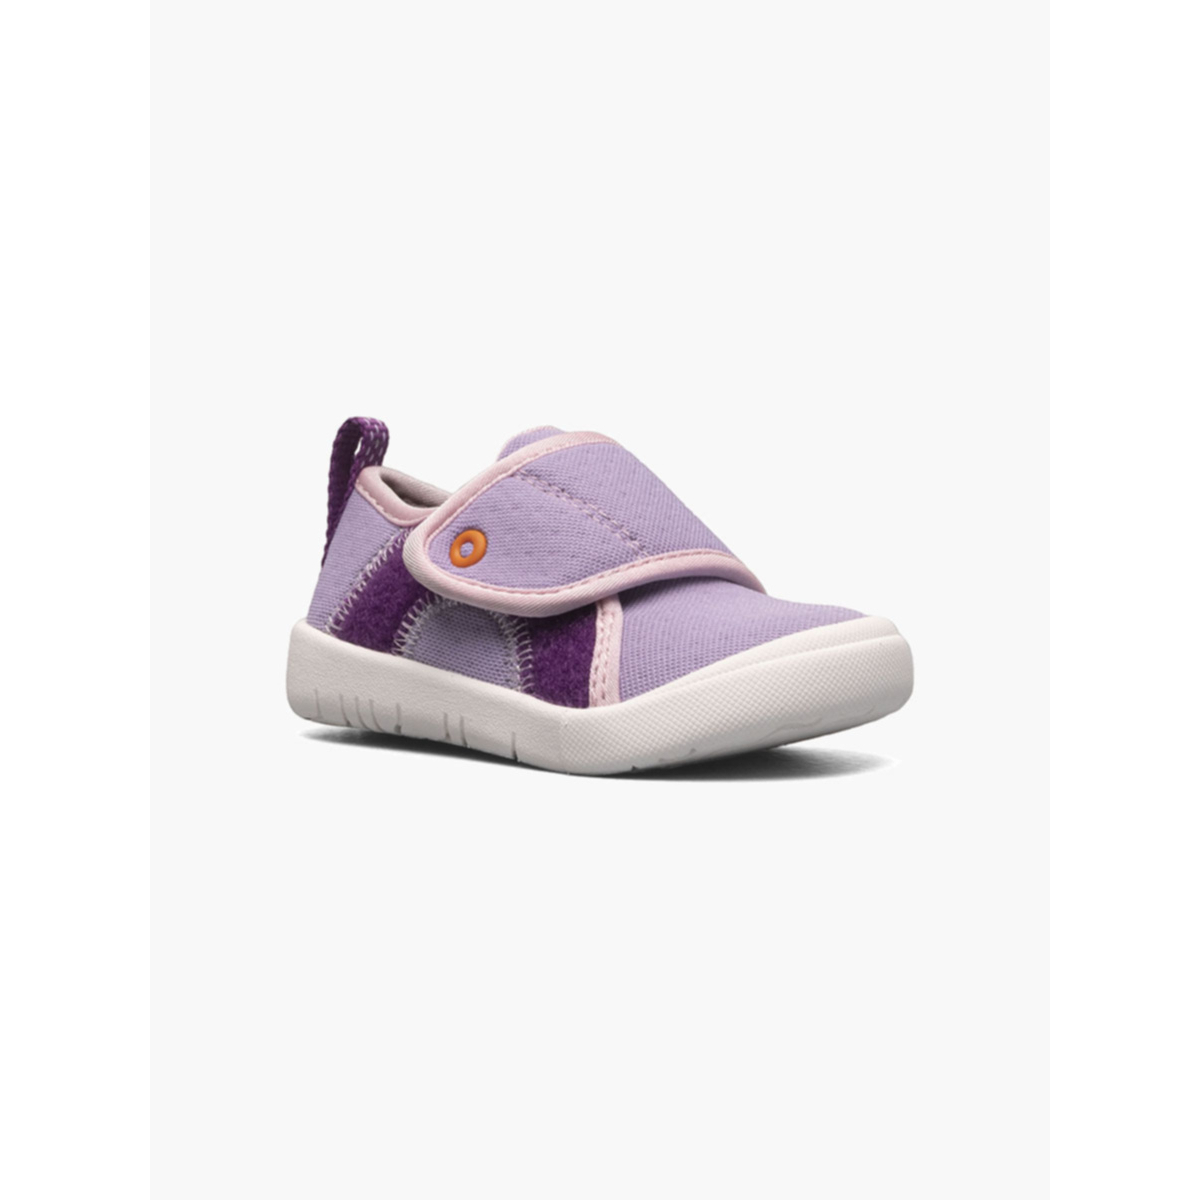 BOGS Unisex Baby Kicker Hook And Loop Shoe Sneaker Lavender Multi - 72811I-541 1 LAVENDER MULTI - LAVENDER MULTI, 8 Little Kid